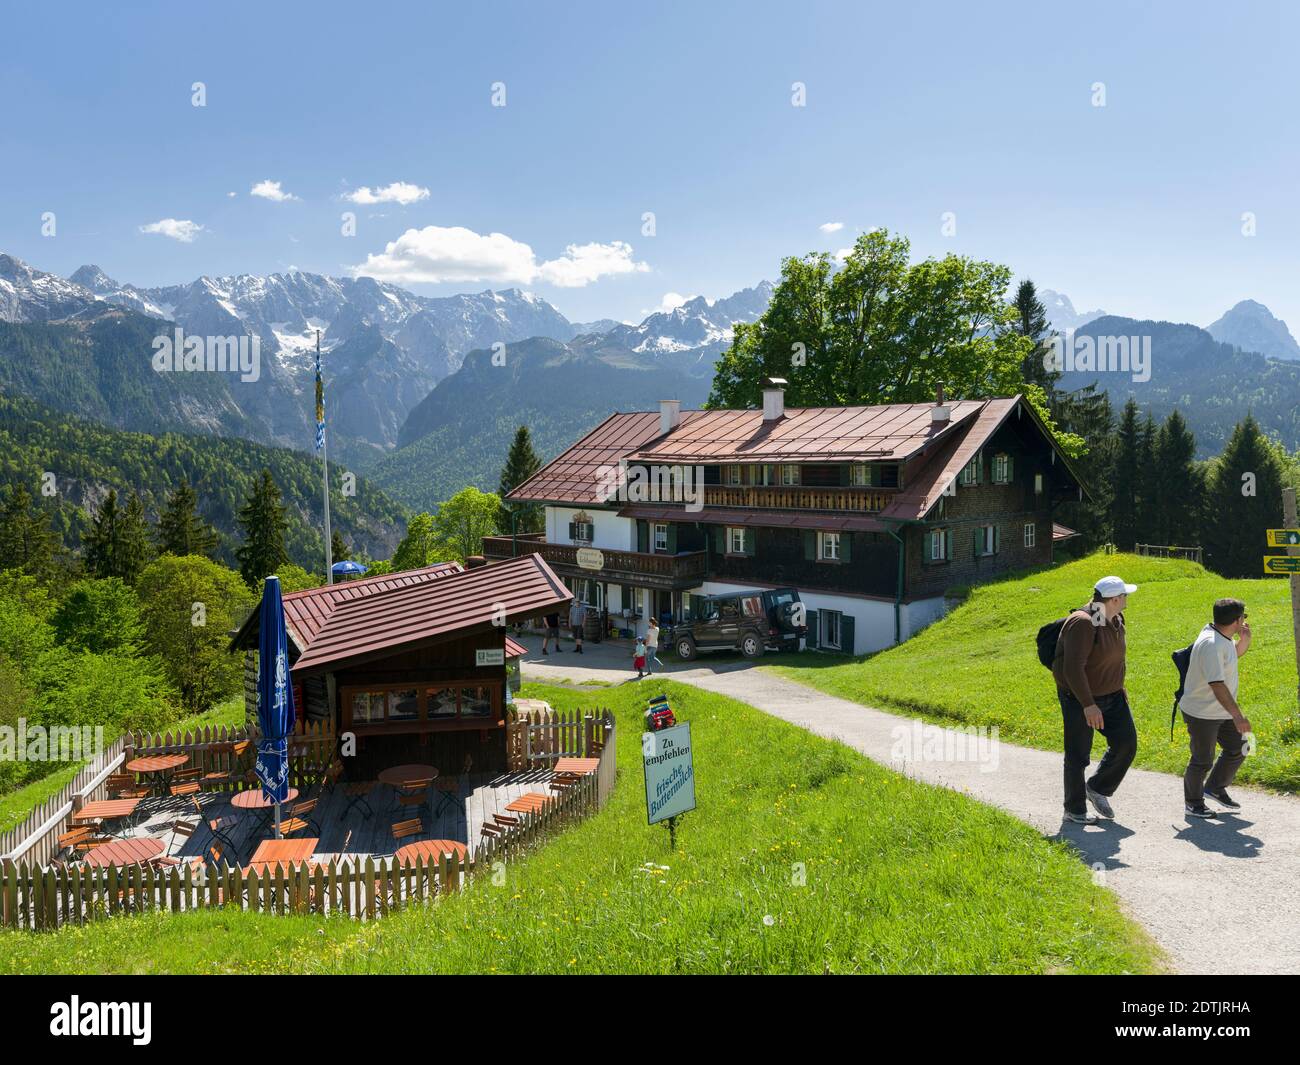 Wetterstein mountain range seen from moutain inn Eckbauer, near Garmisch Partenkirchen. Europe, central europe, germany, bavaria Stock Photo